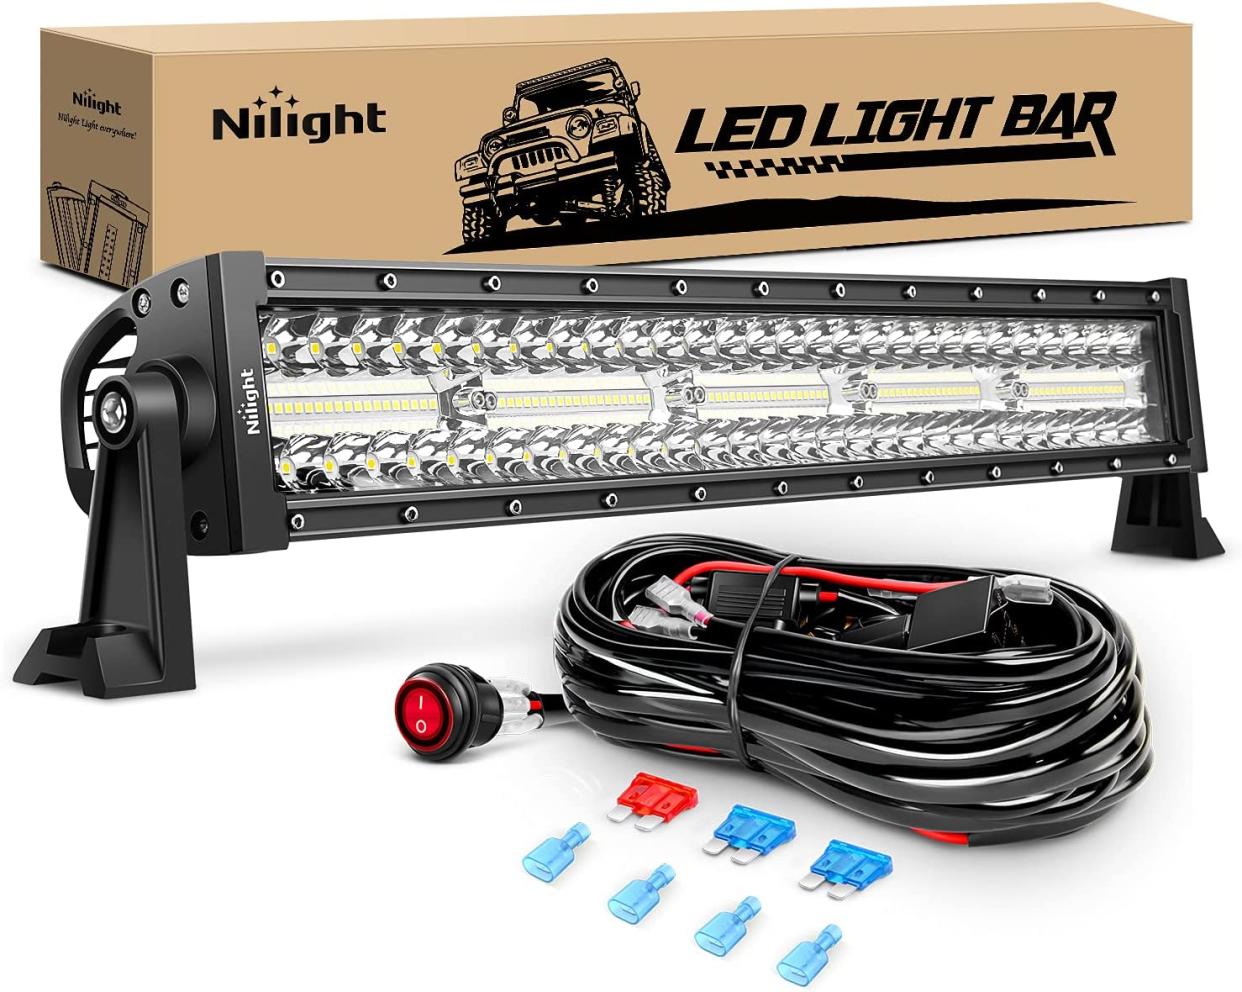 Nilight-LED-Light-Bar-22-inch-Triple-Row